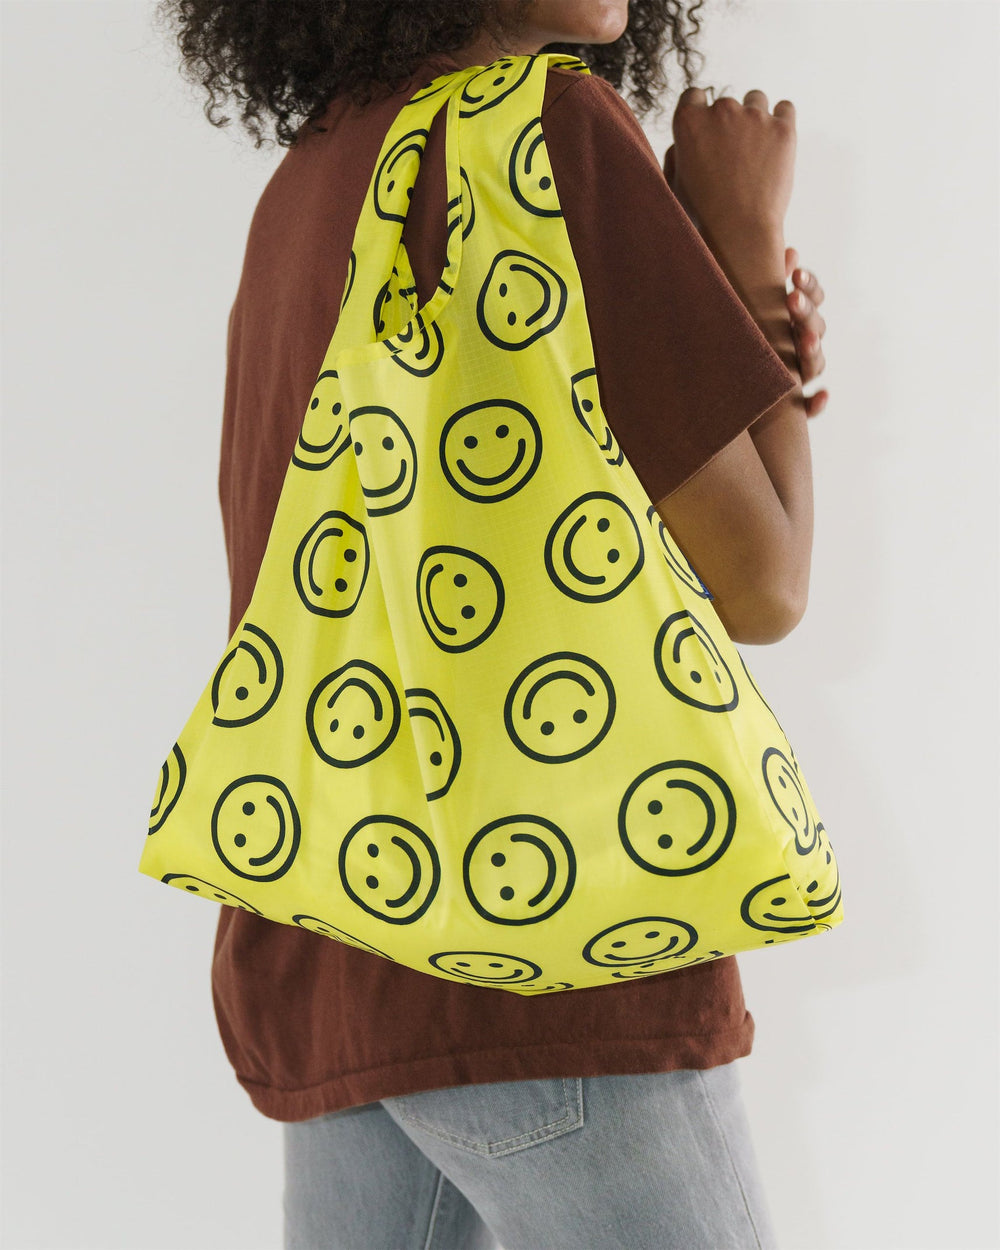 Standard Baggu Bag Yellow Happy – The Fairnest